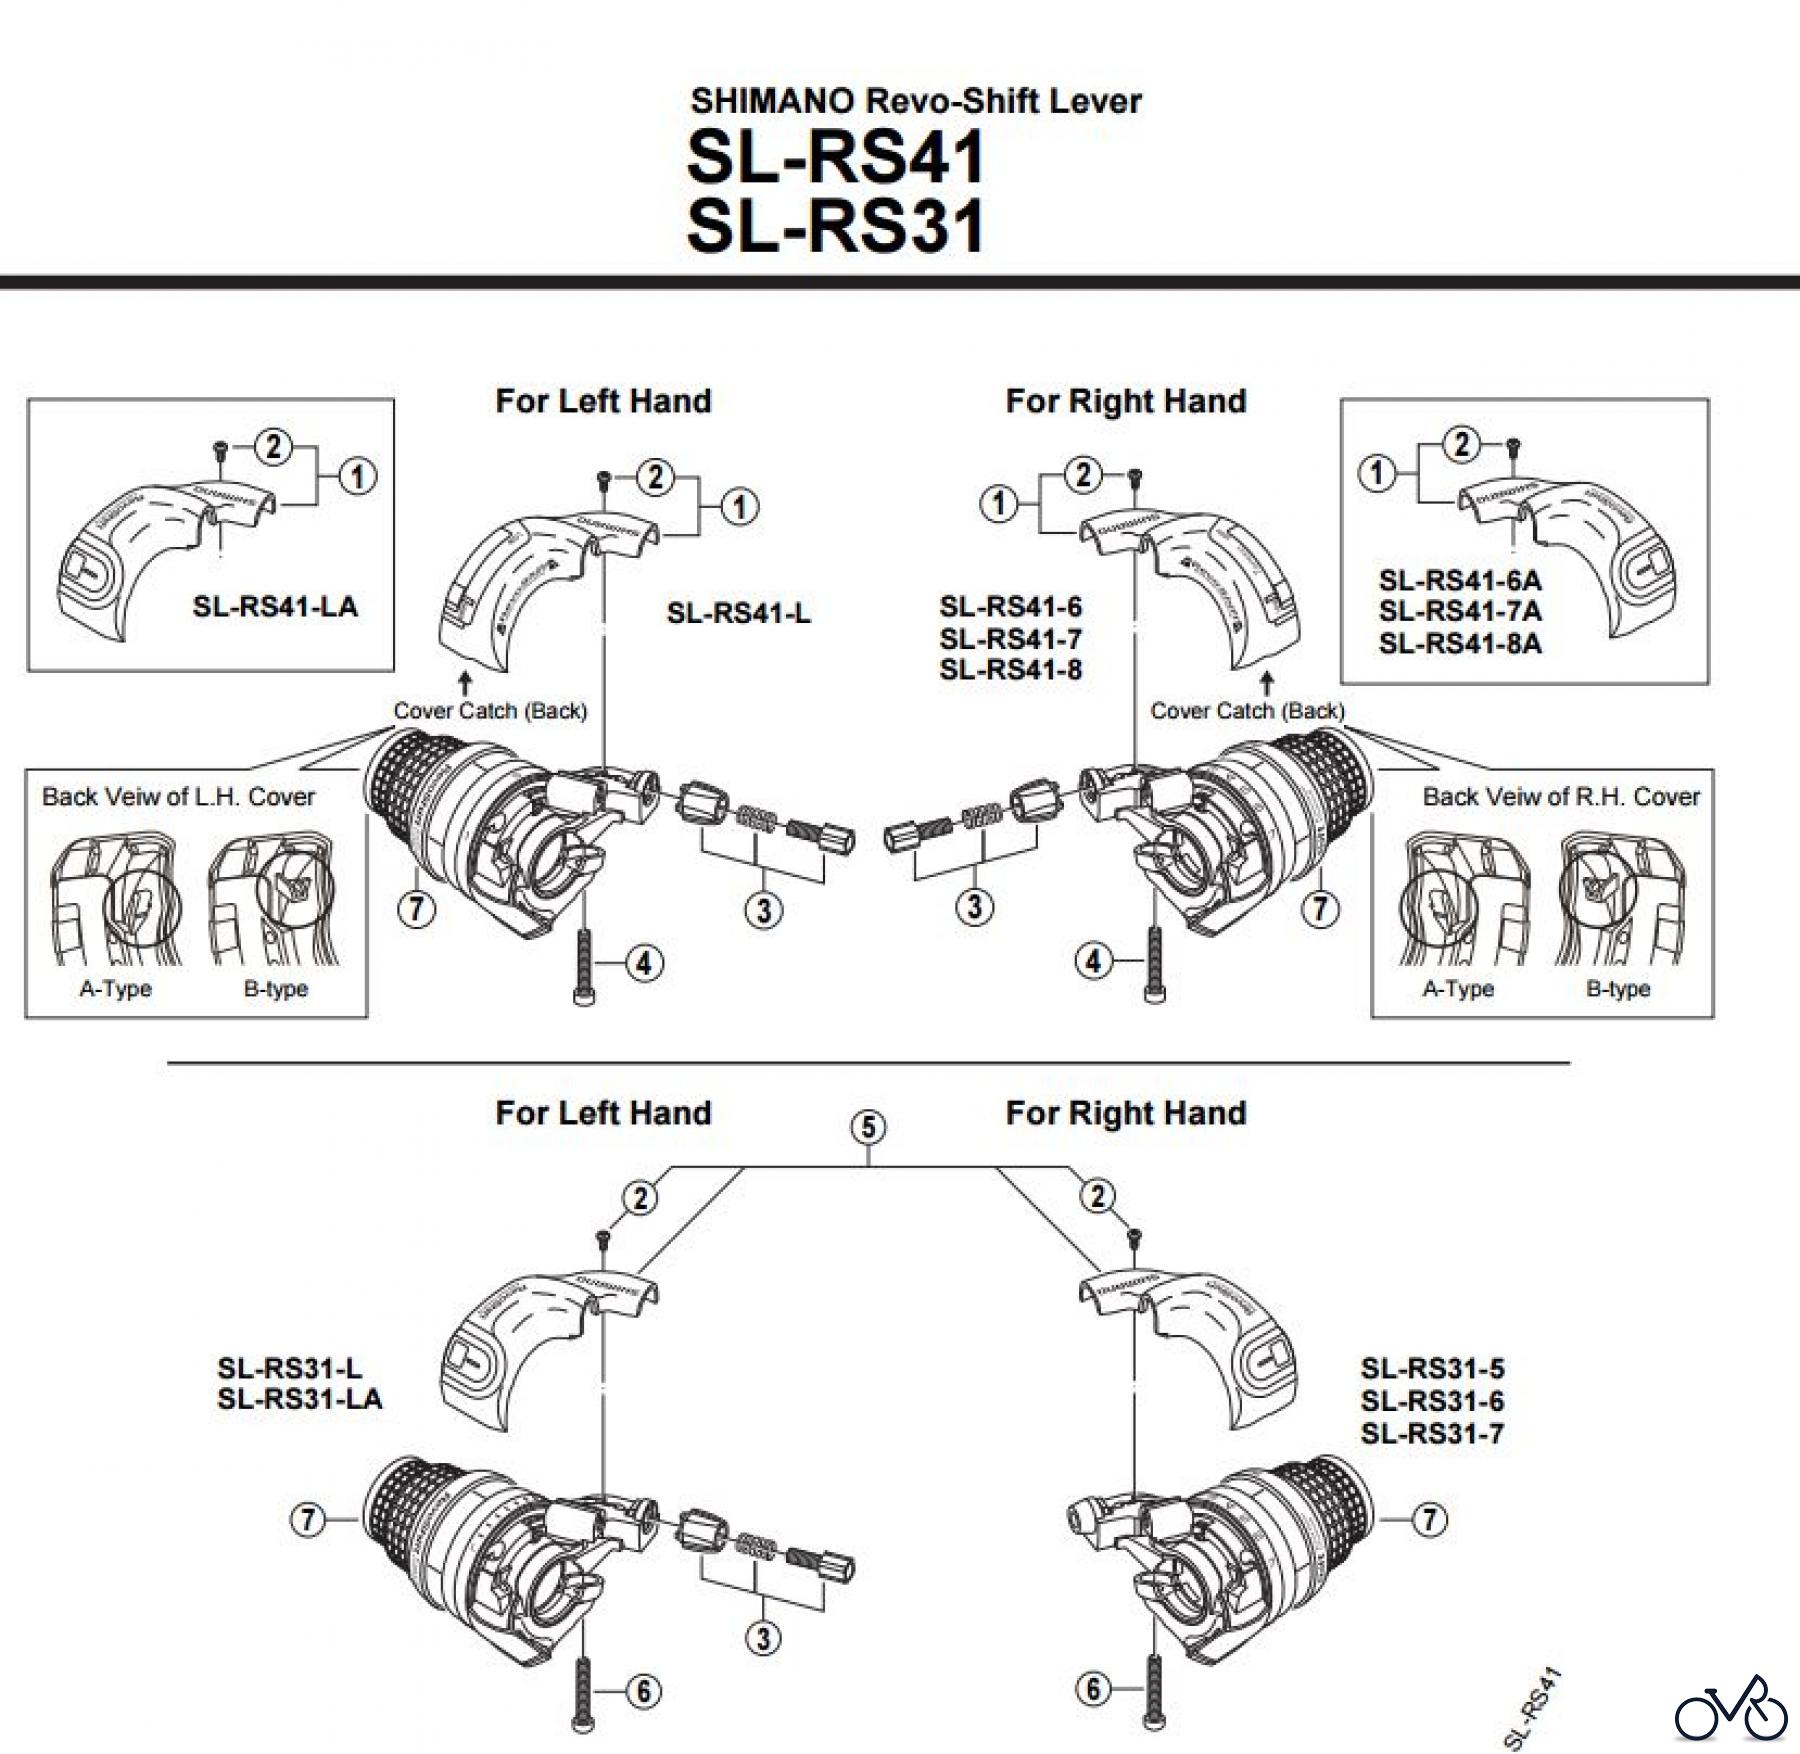  Shimano SL Shift Lever - Schalthebel SL-RS41-2104E SHIMANO Revo-Shift Lever